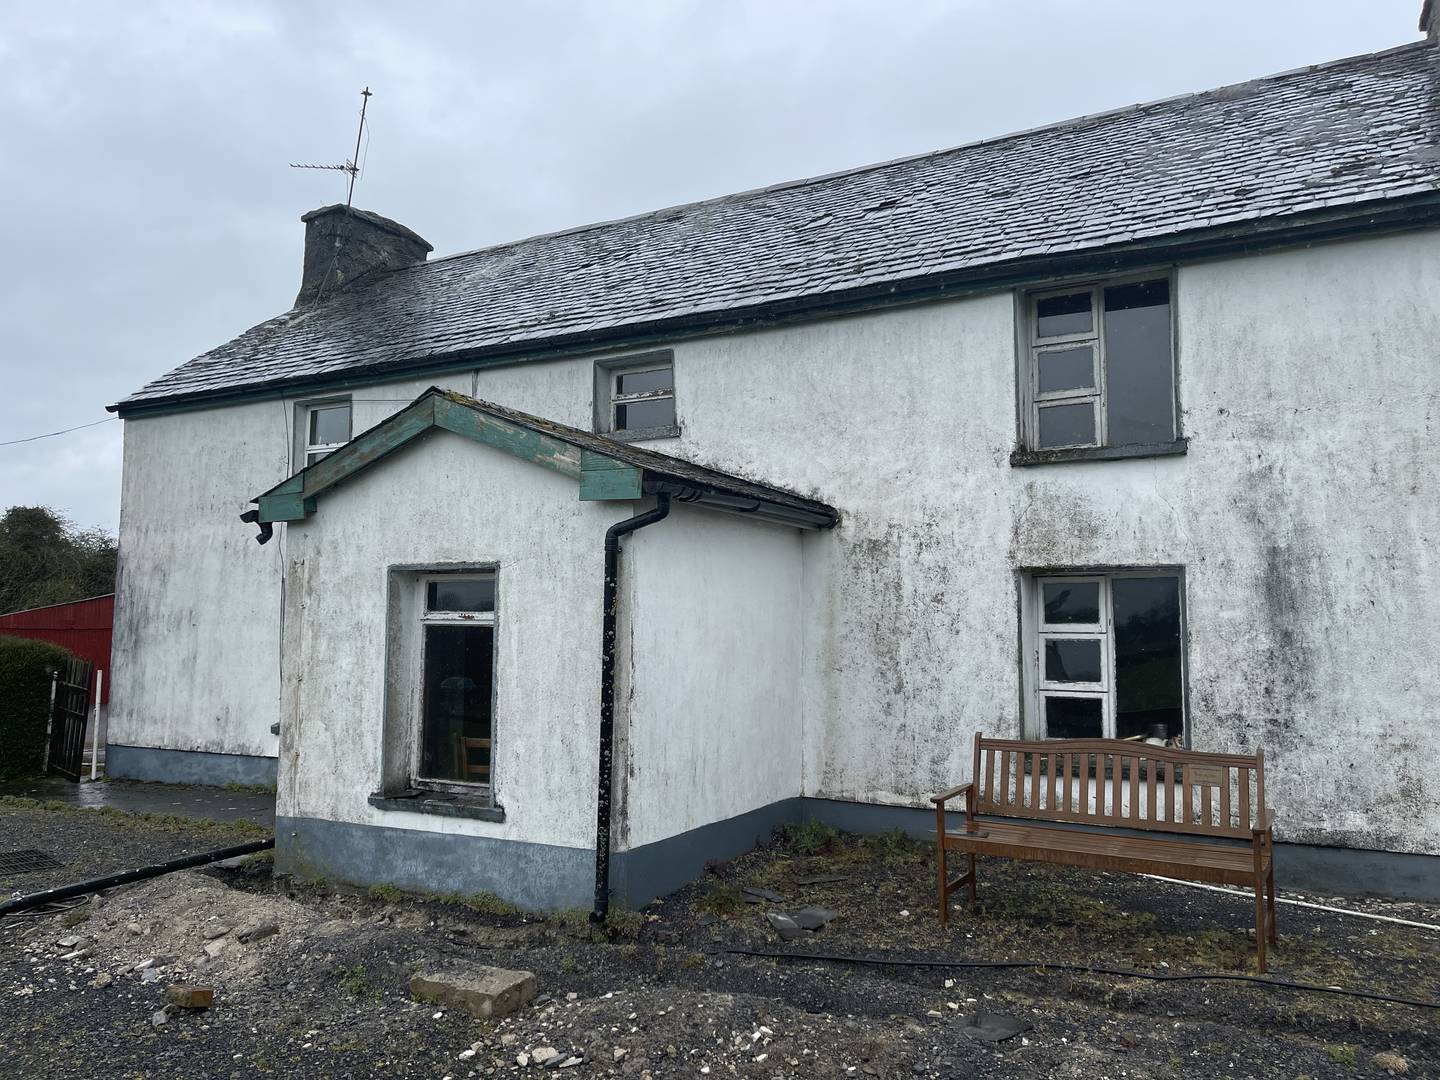 The old farmhouse near Urlingford in Co Kilkenny